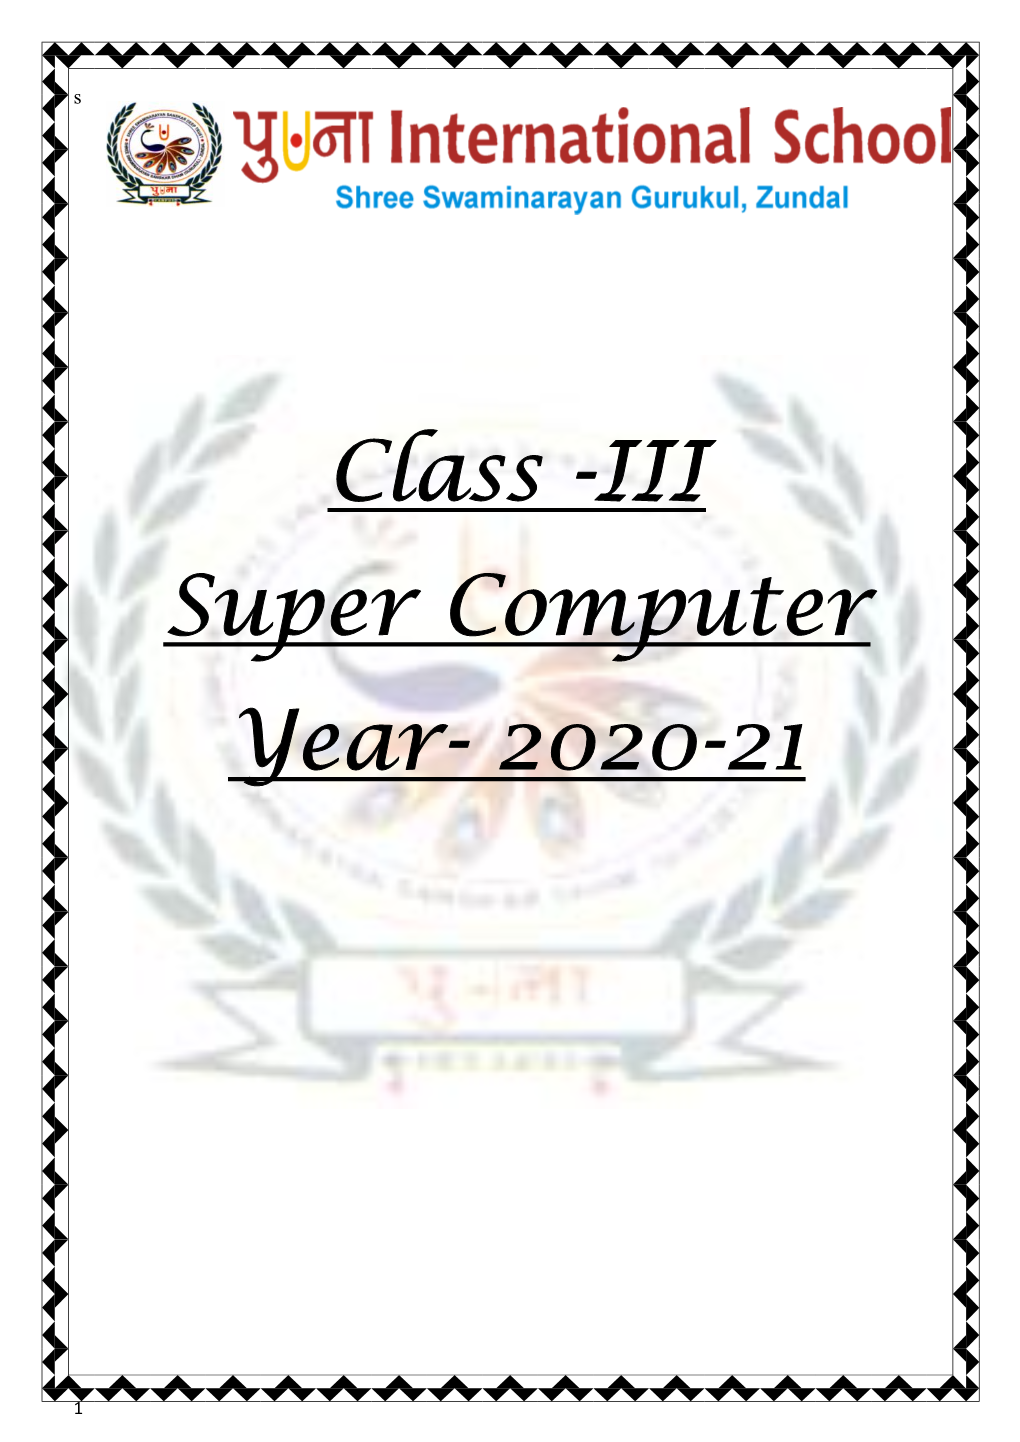 Class -III Super Computer Year- 2020-21